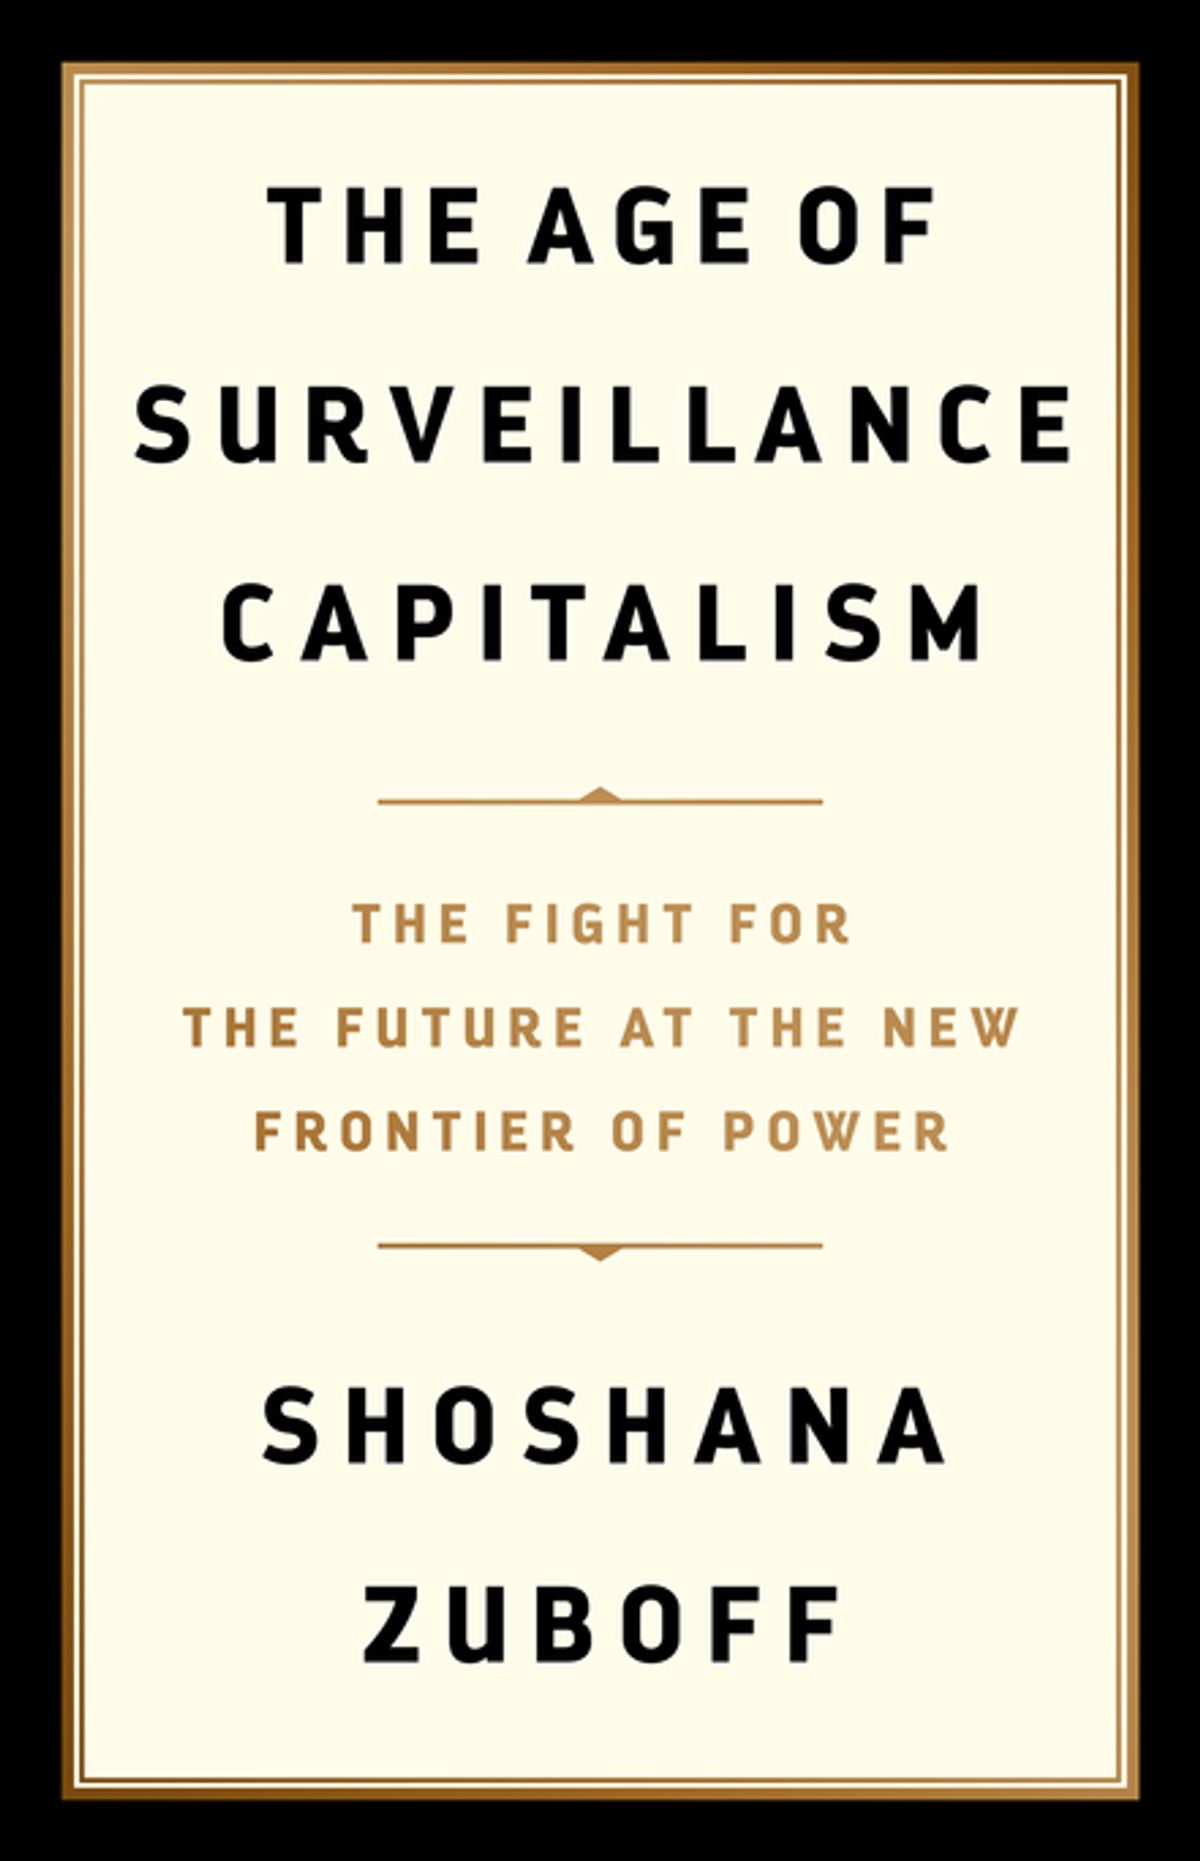 the era of surveillance capitalism